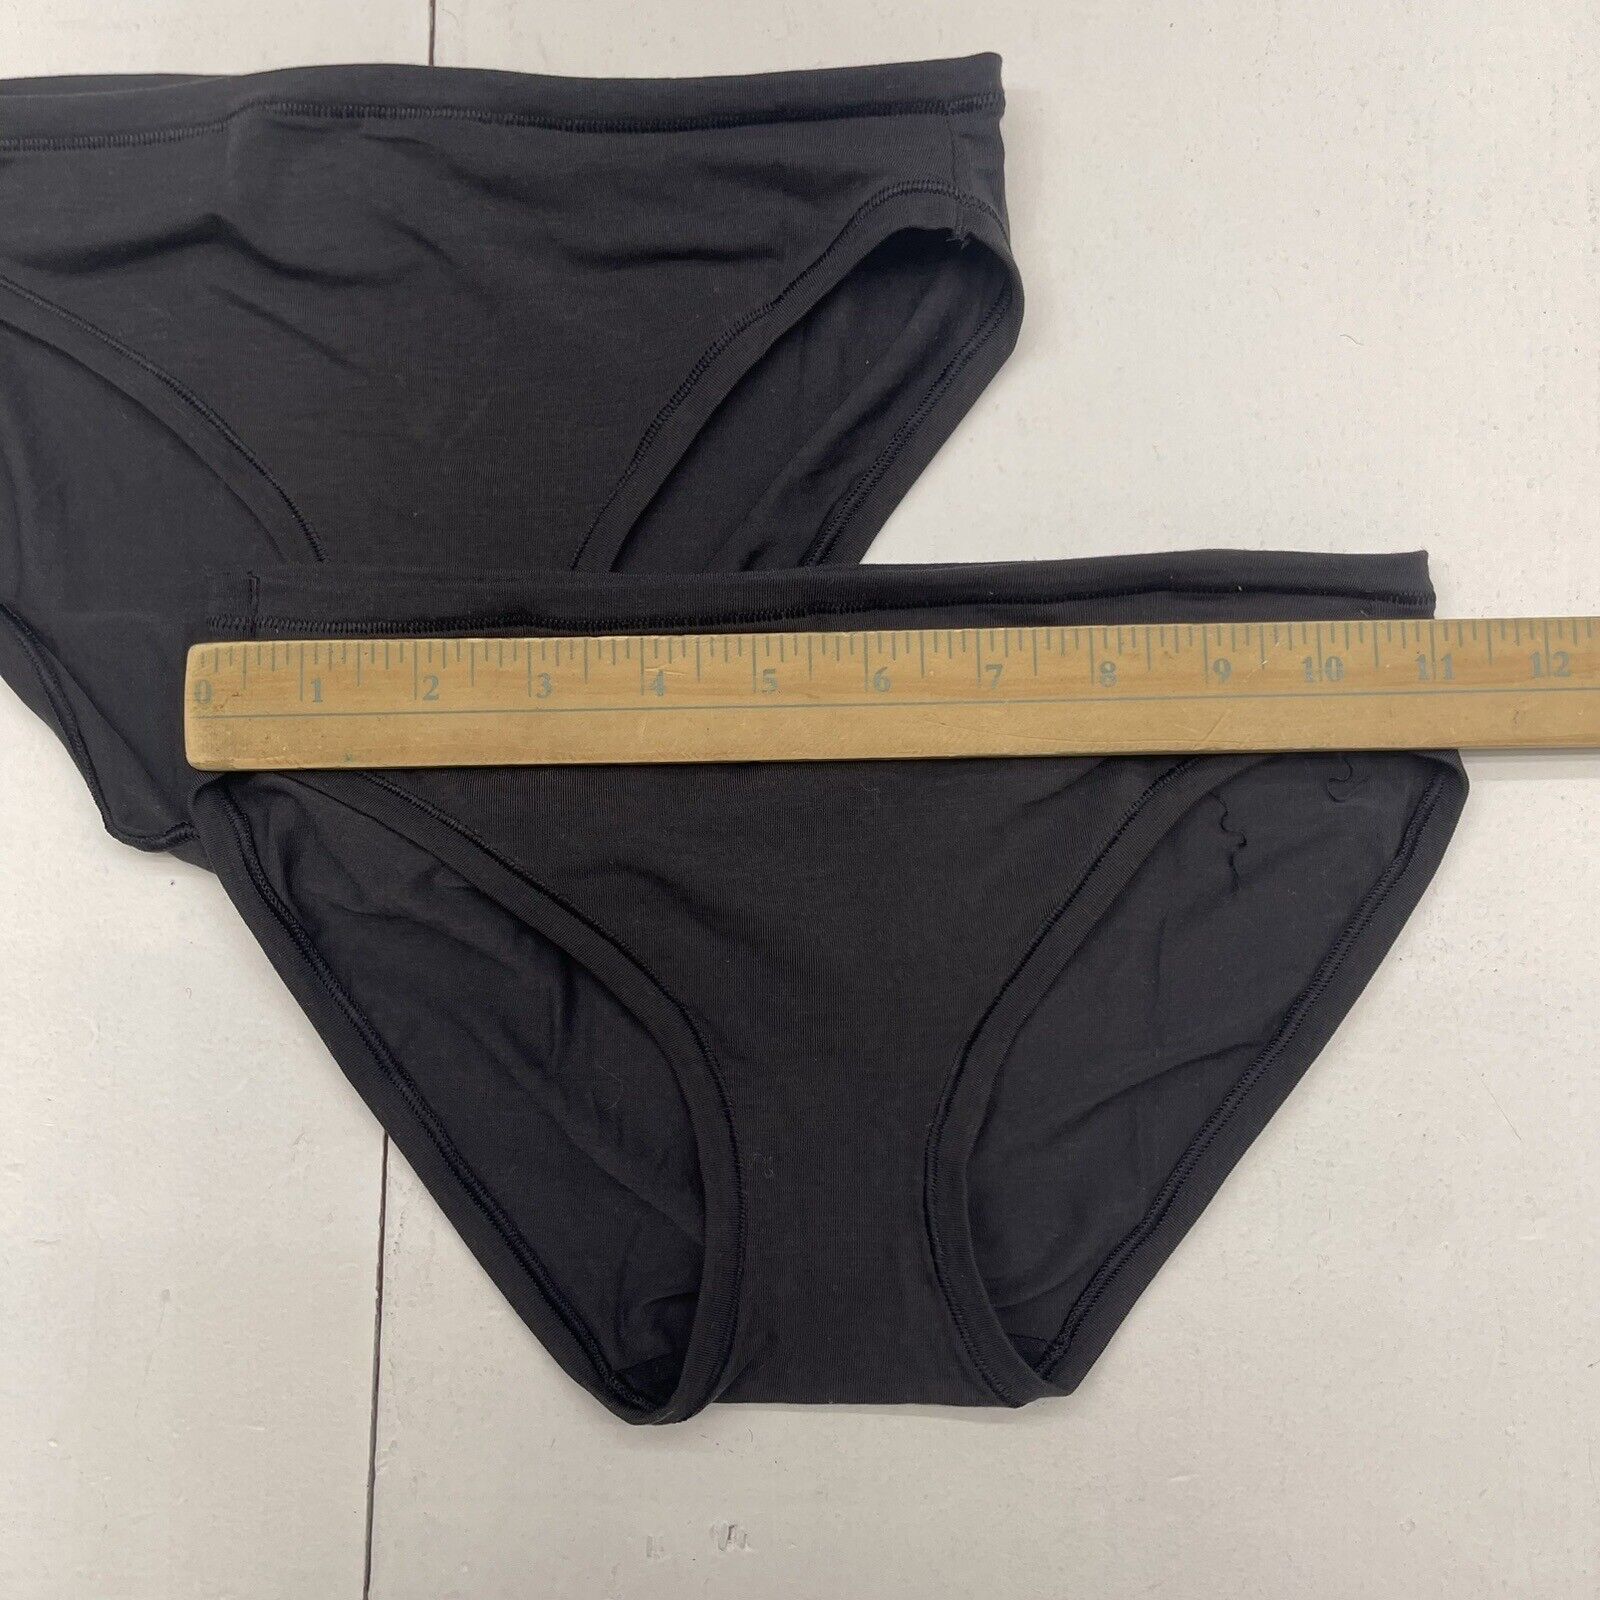 Gap Body Black Breathe Bikini Underwear 2 Pack Women's Medium NWOT